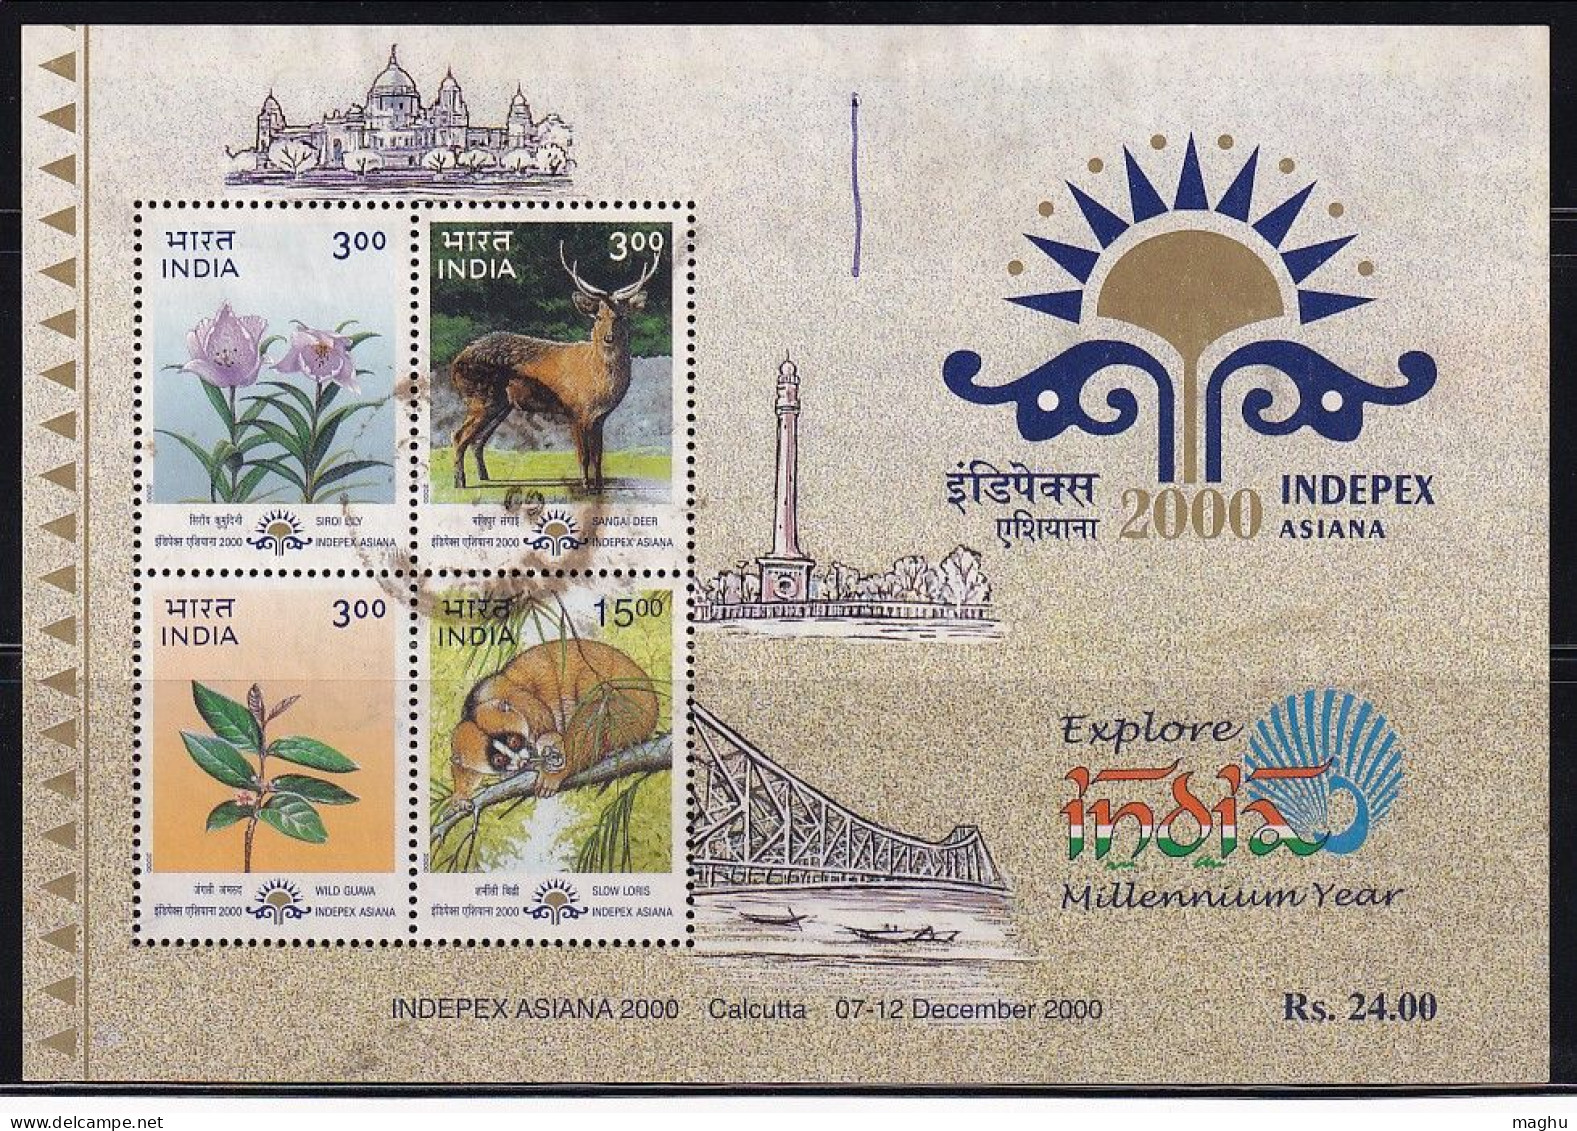 Postal Used India Miniature 2000, INDEPEX ASIANA, Lily Flower, Deer, Guave, Snow Loris, Animal, Bridge, Millenium - Gebruikt